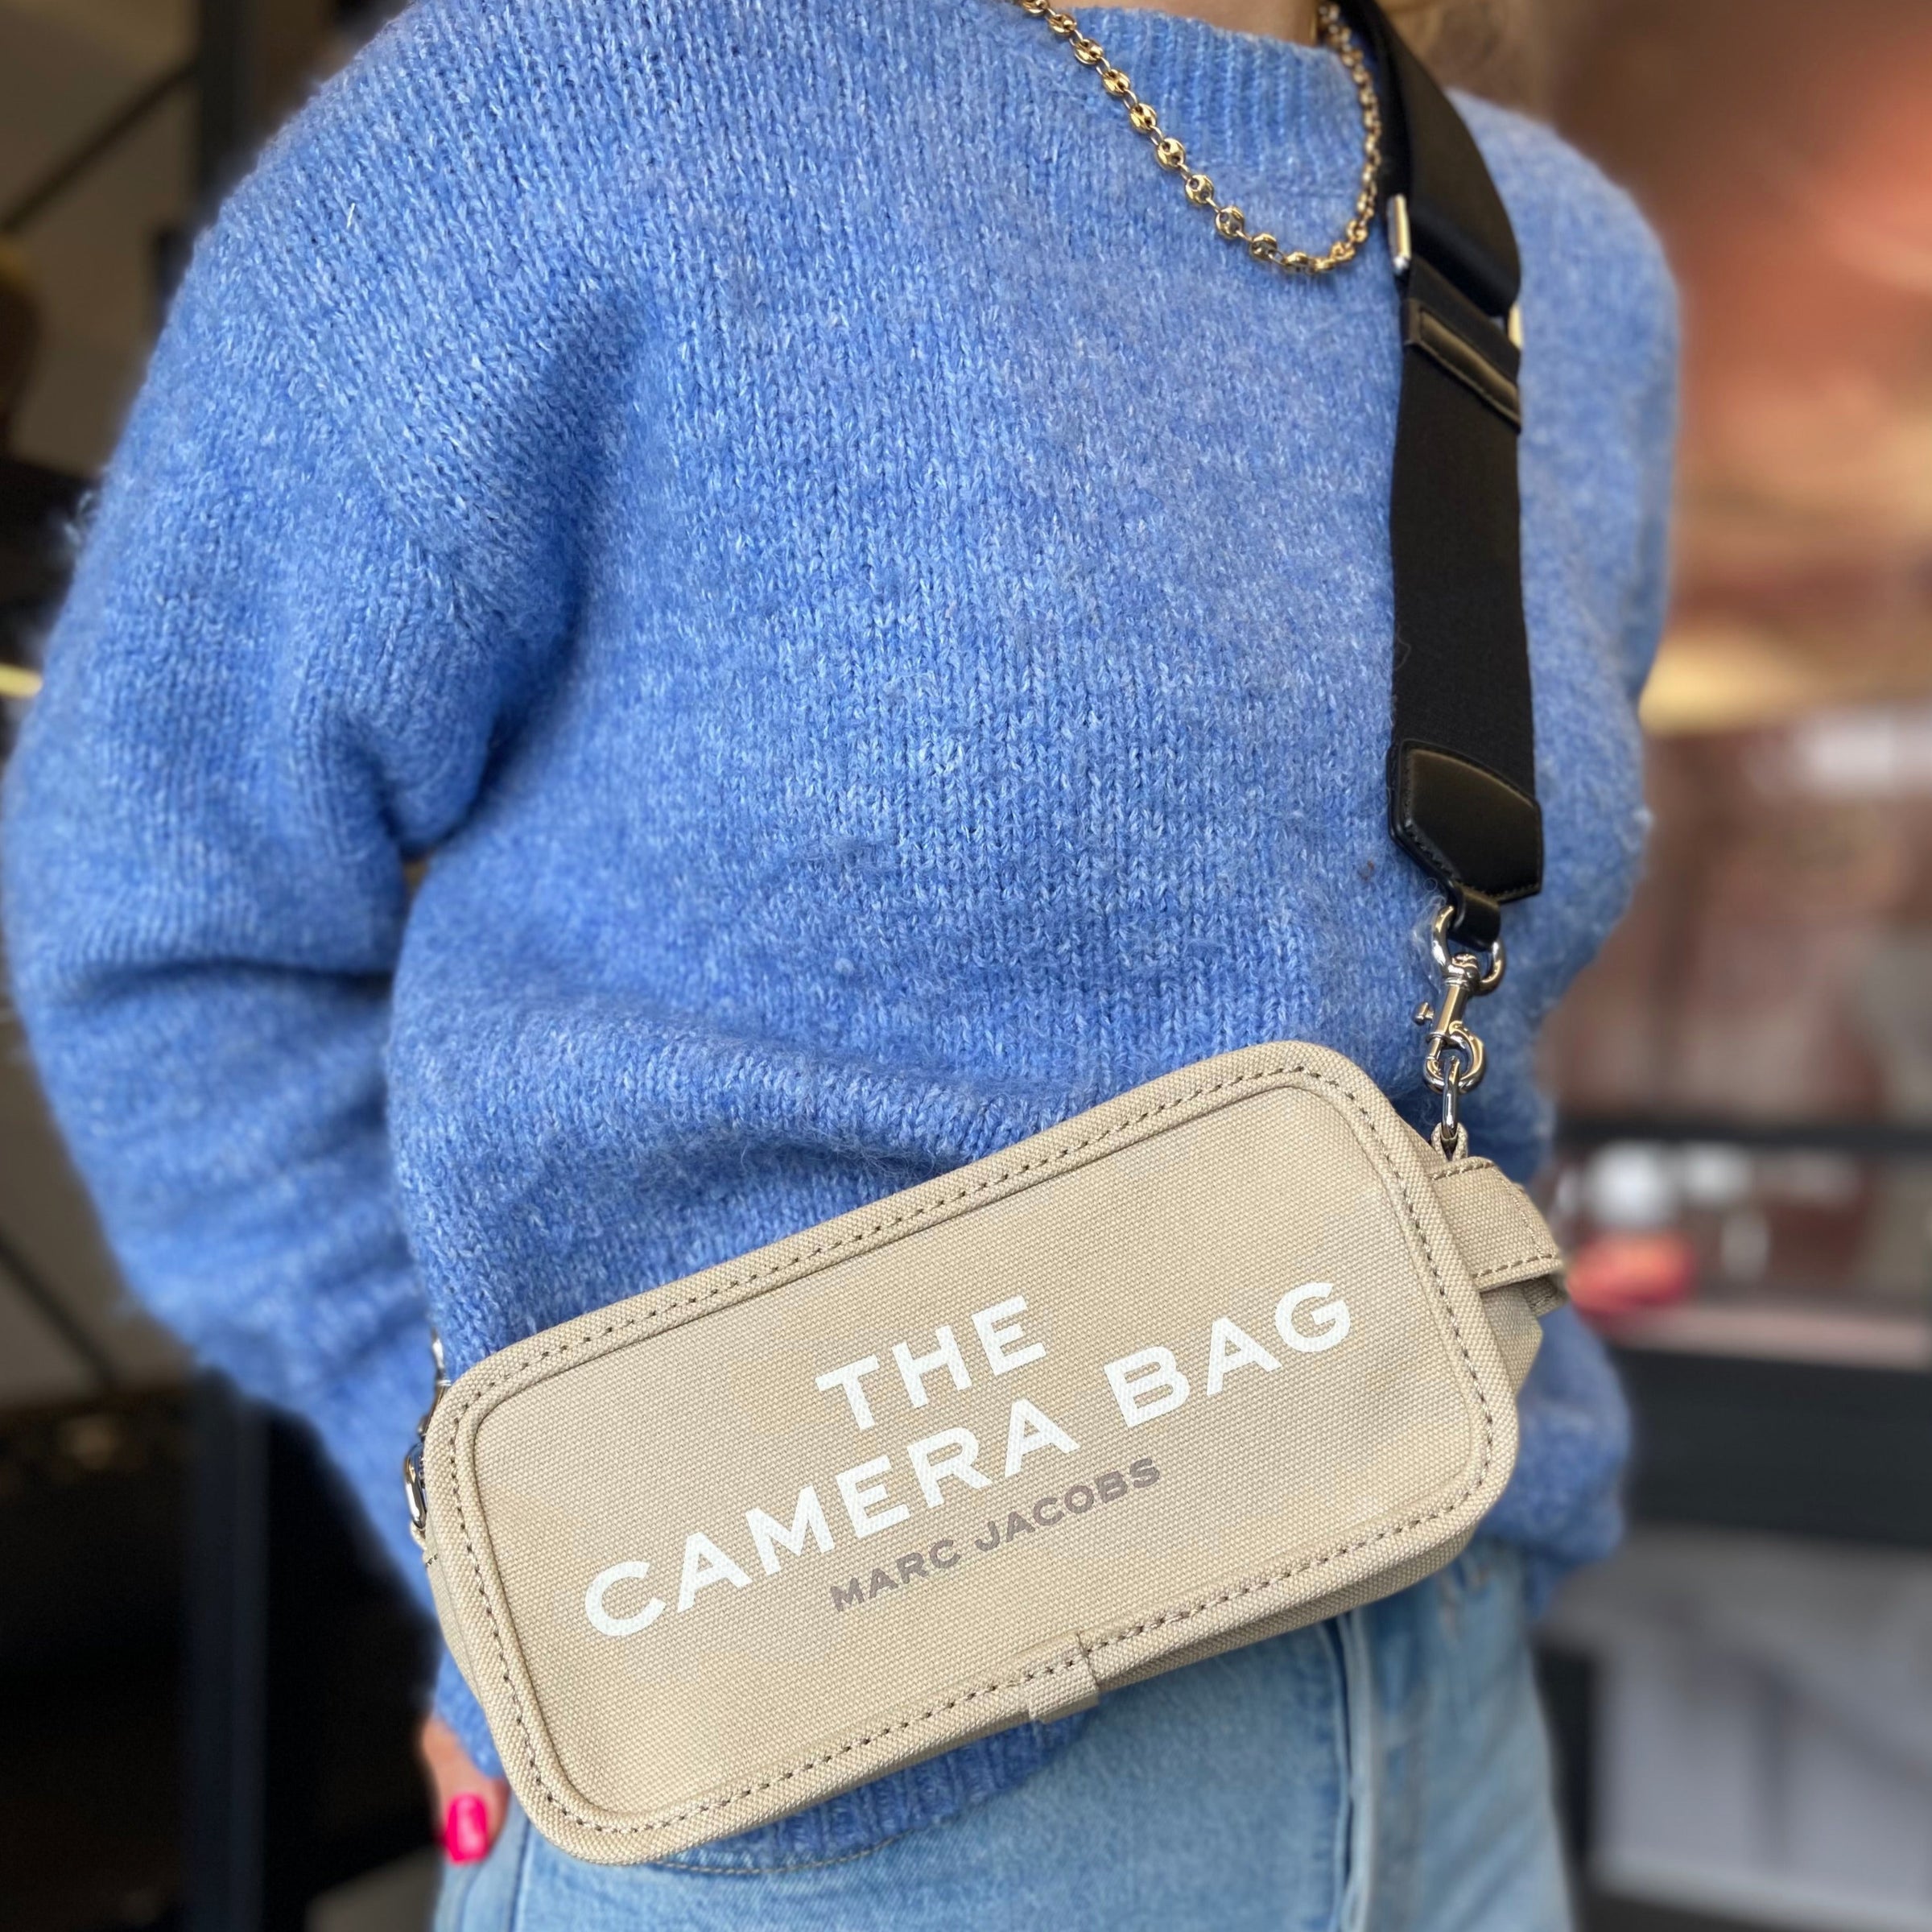 Marc Jacobs The Camera Bag BEIGE Model M0017040-260